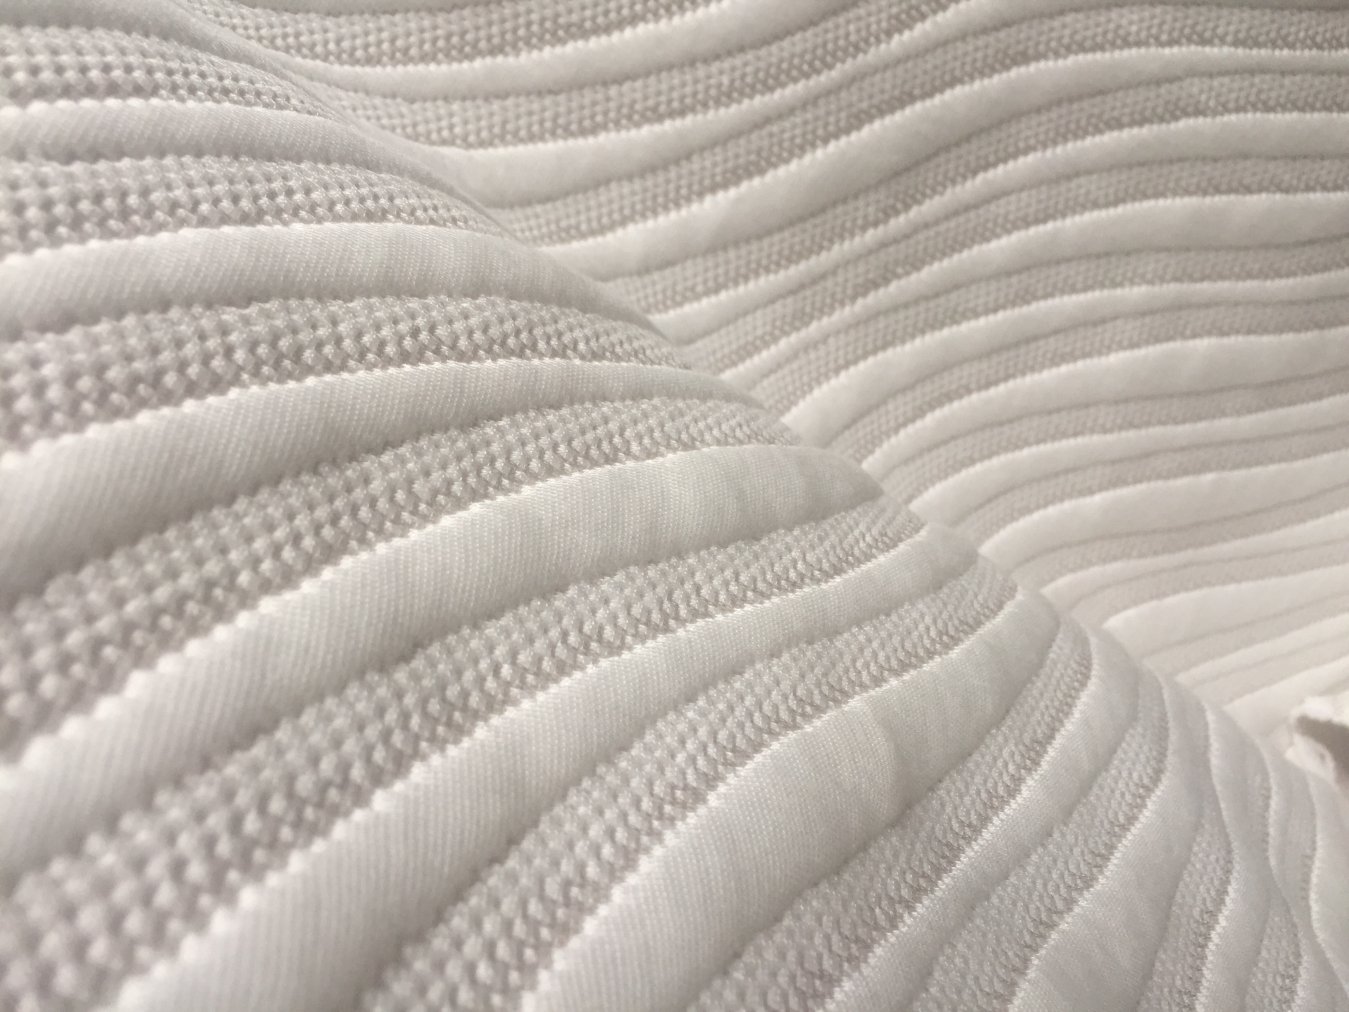 İki Yıldız Örme Knitted mattress ticking fabric Yatak kumaşı